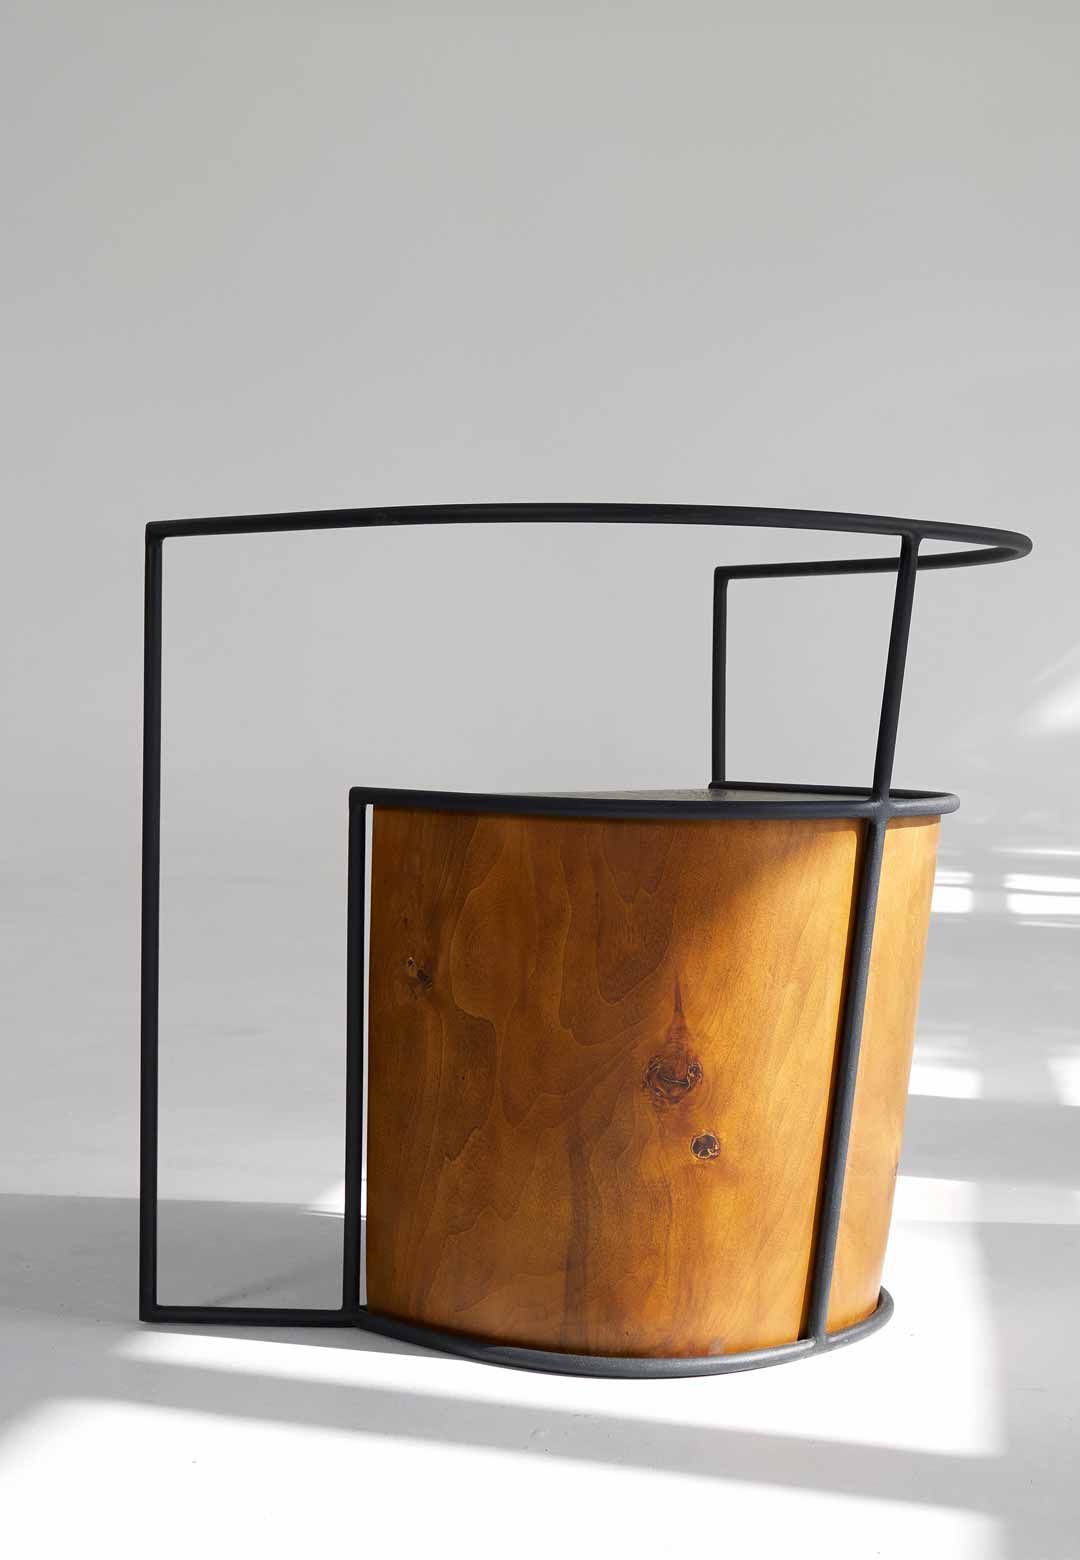 Nissa Kinzhalina’s Stubby Chair displayed at Dubai Design Week 2021